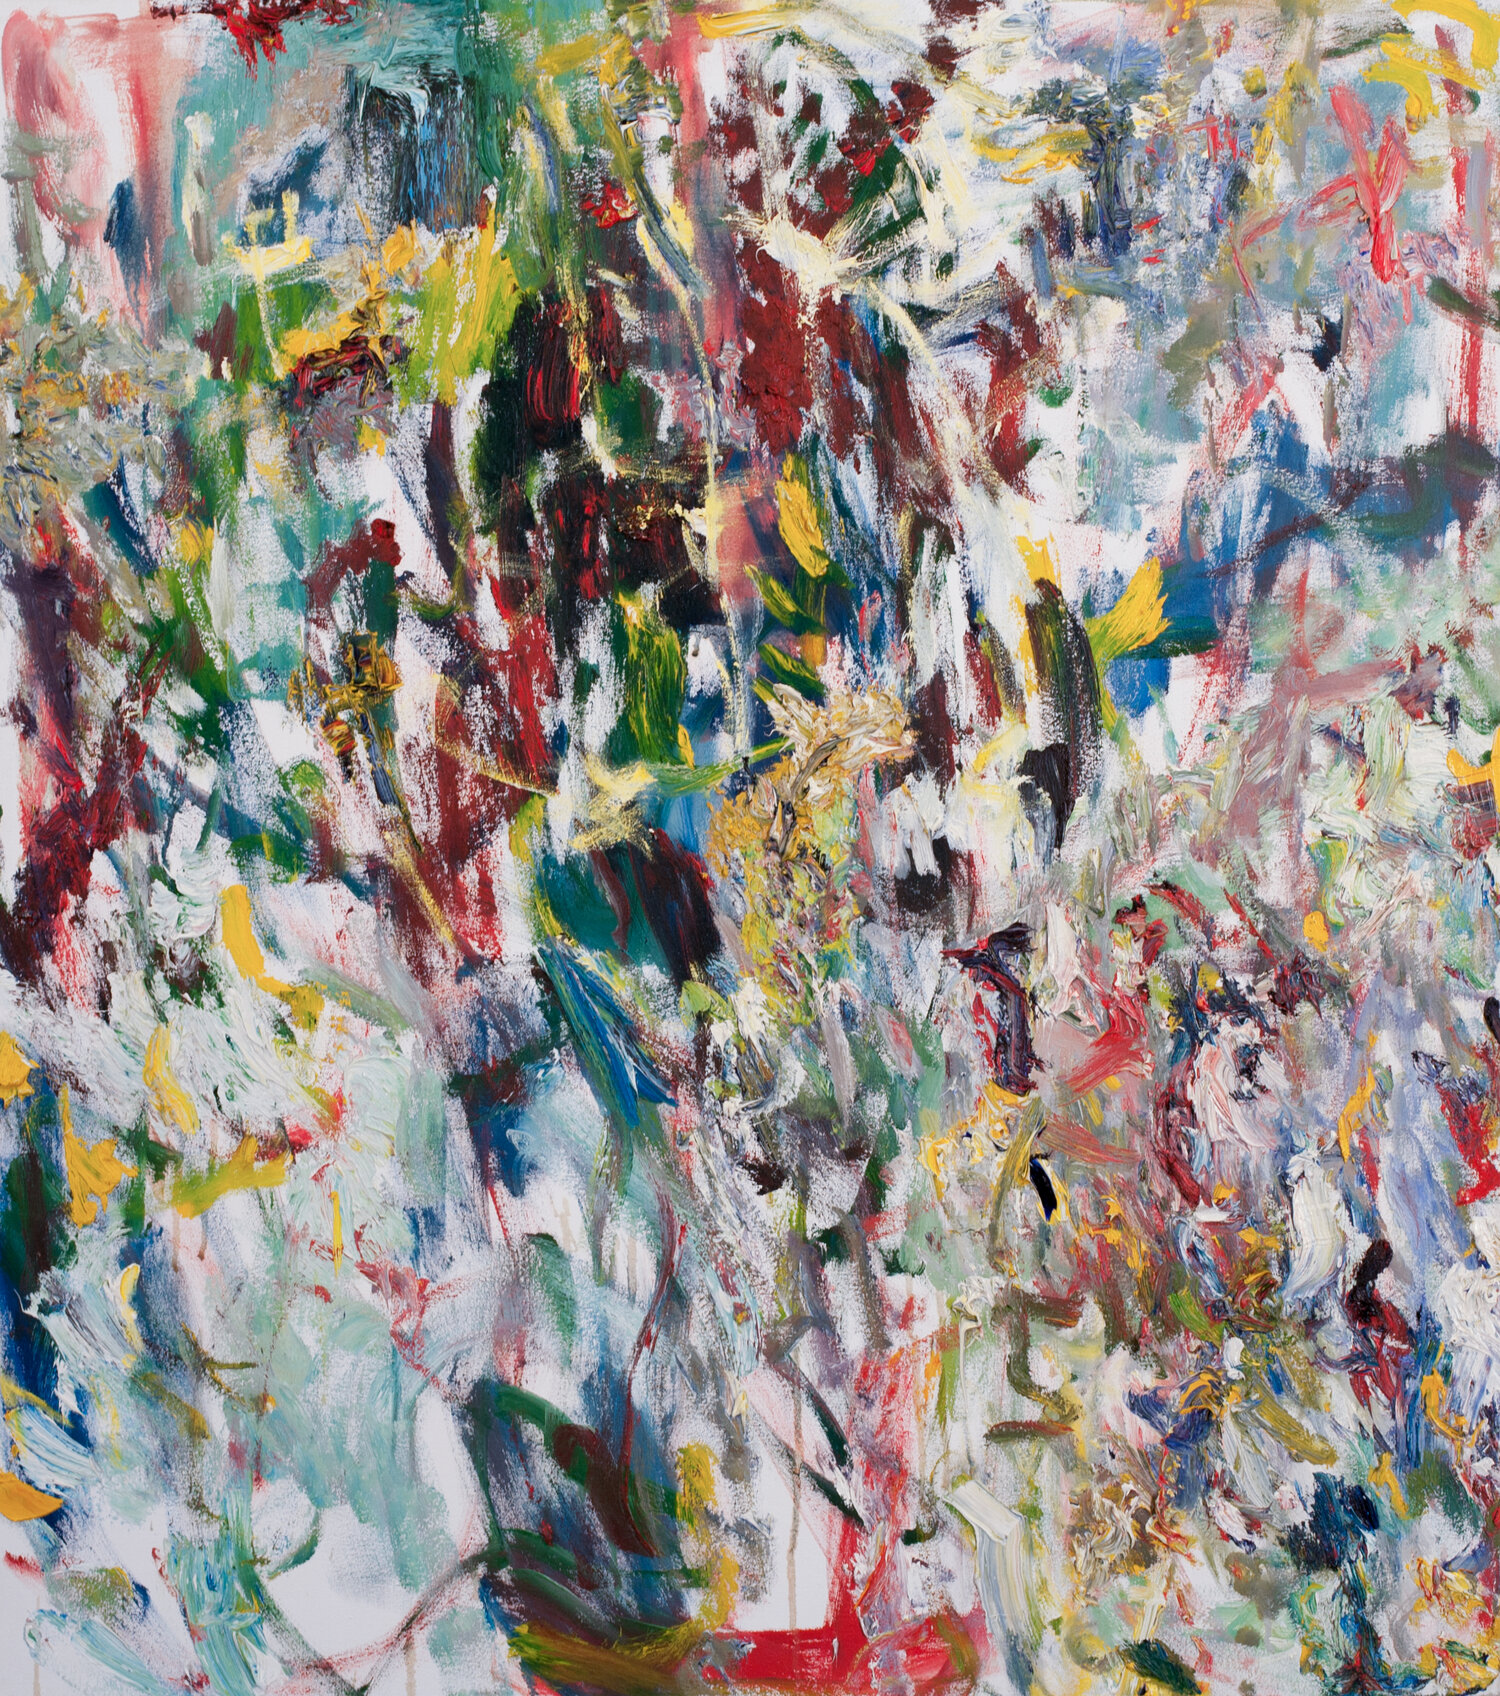 "Resist", Sep "05, Sep '019, oil on canvas, 43" x 37"